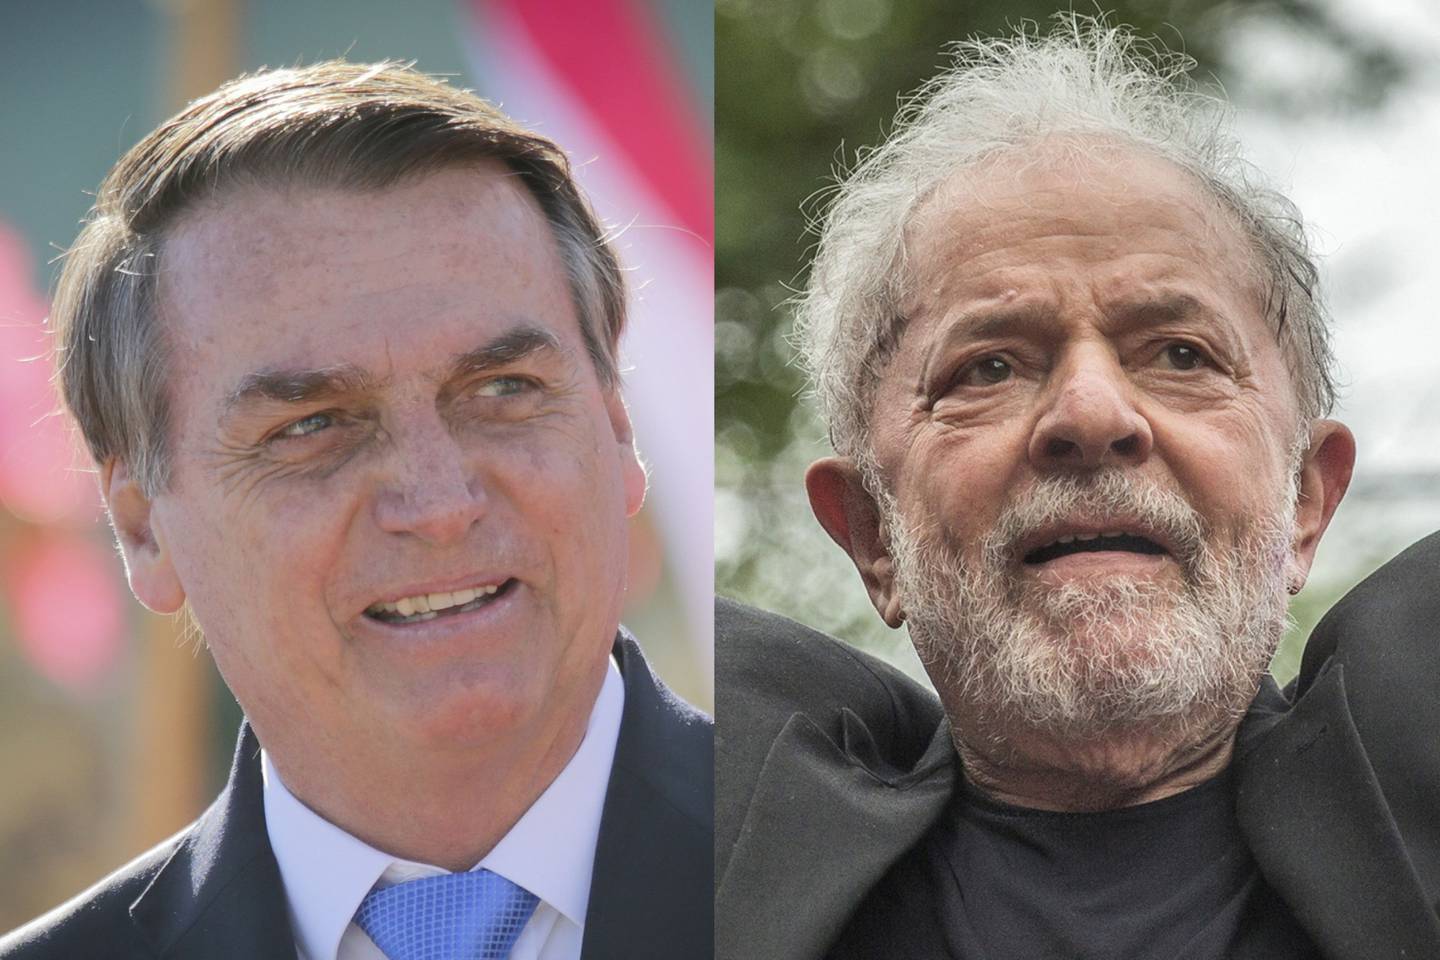 Jair Bolsonaro y Luiz Inacio Lula da Silva. Fotógrafo: Victor J. Blue/Bloomberg